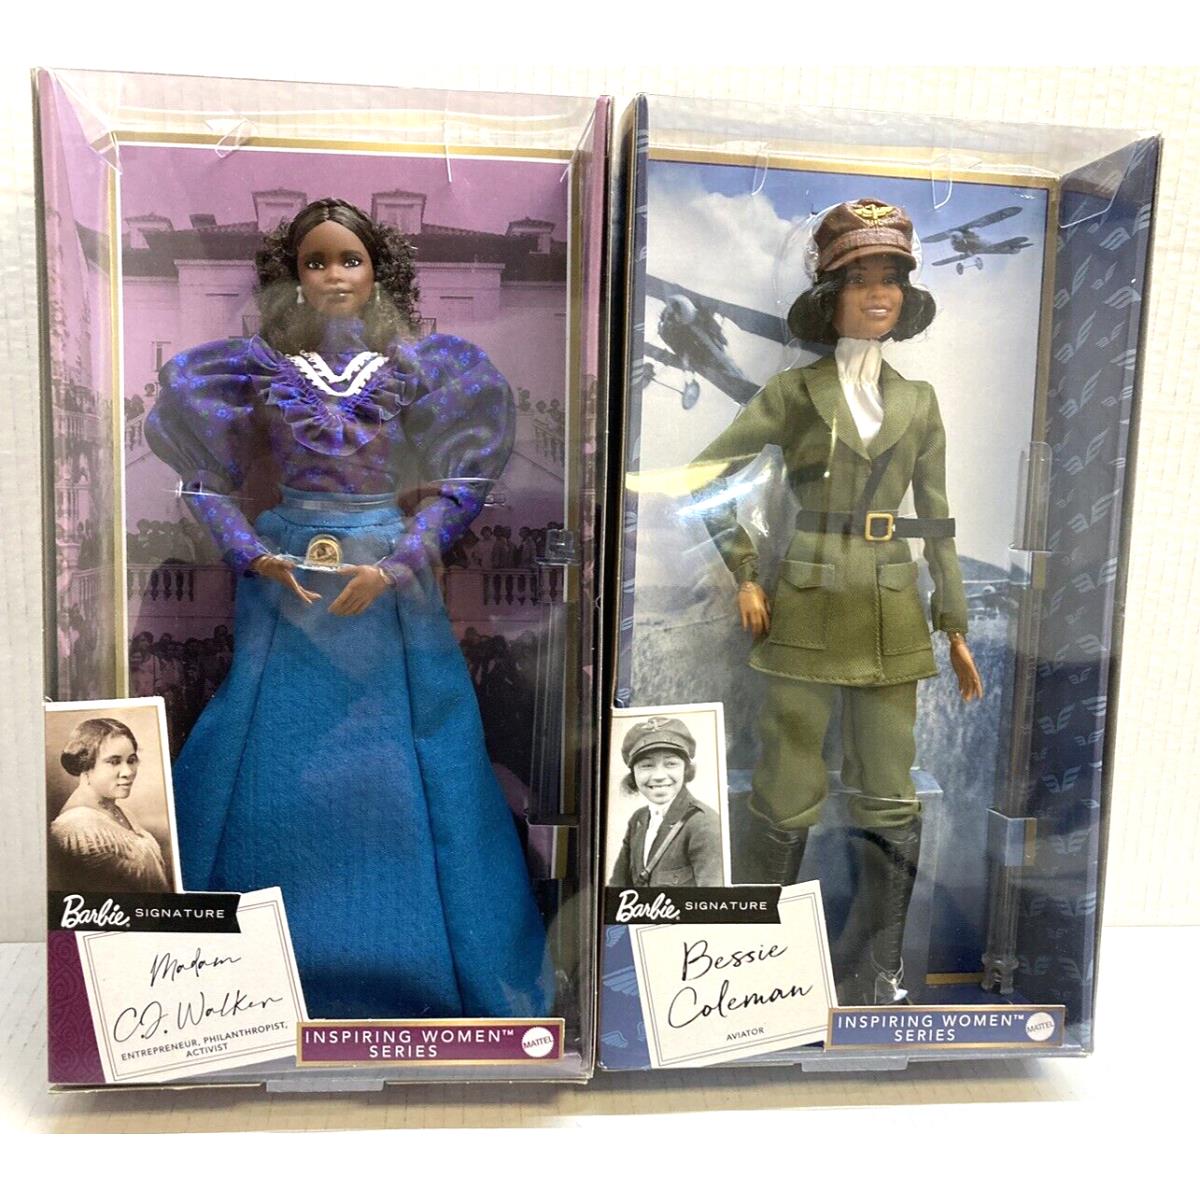 Barbie Signature-inspiring Women Series-madam CJ Walker and Bessie Coleman-new